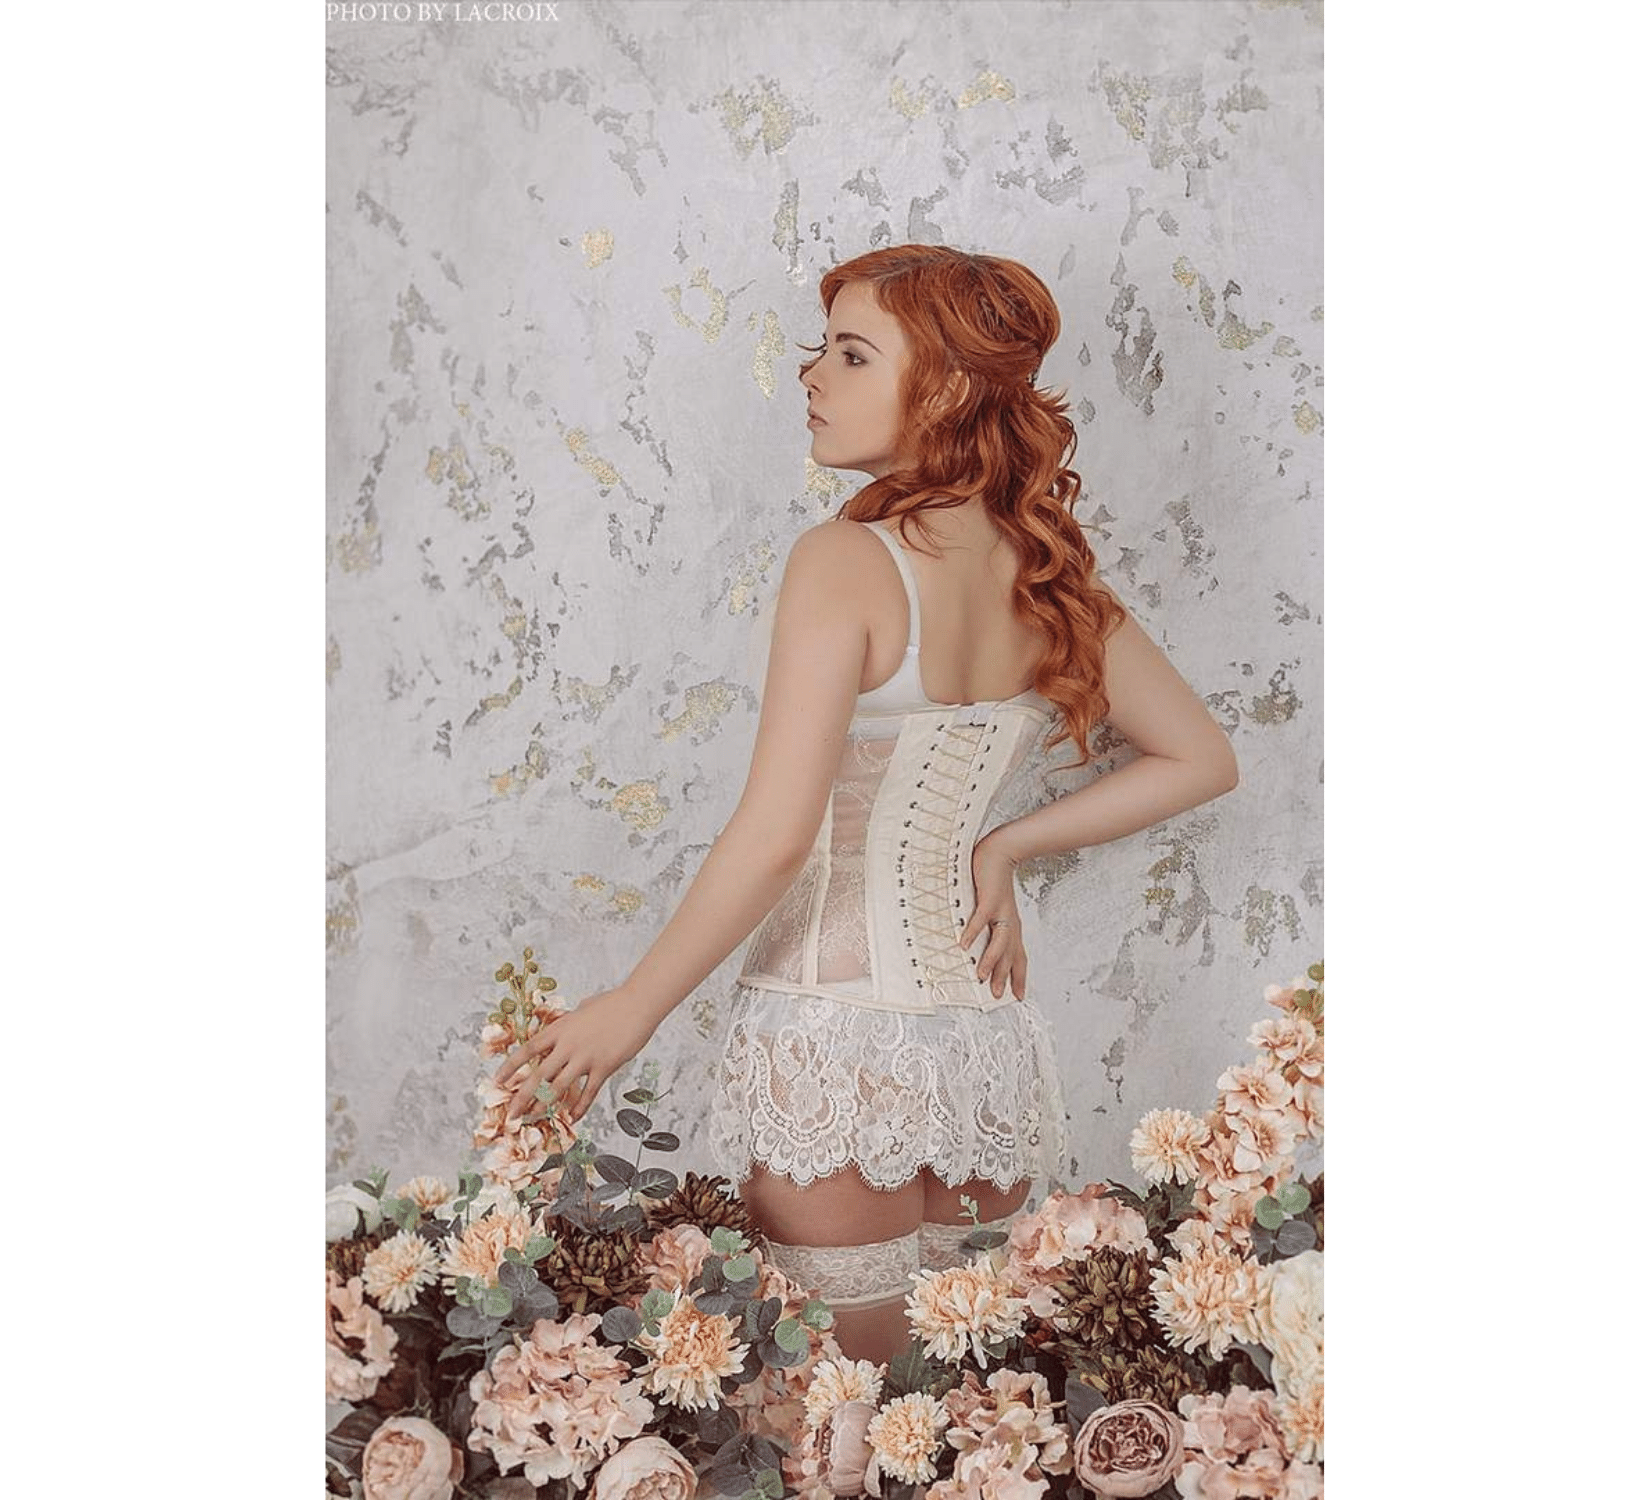 White wedding corset  DressArtMystery – Dress Art Mystery